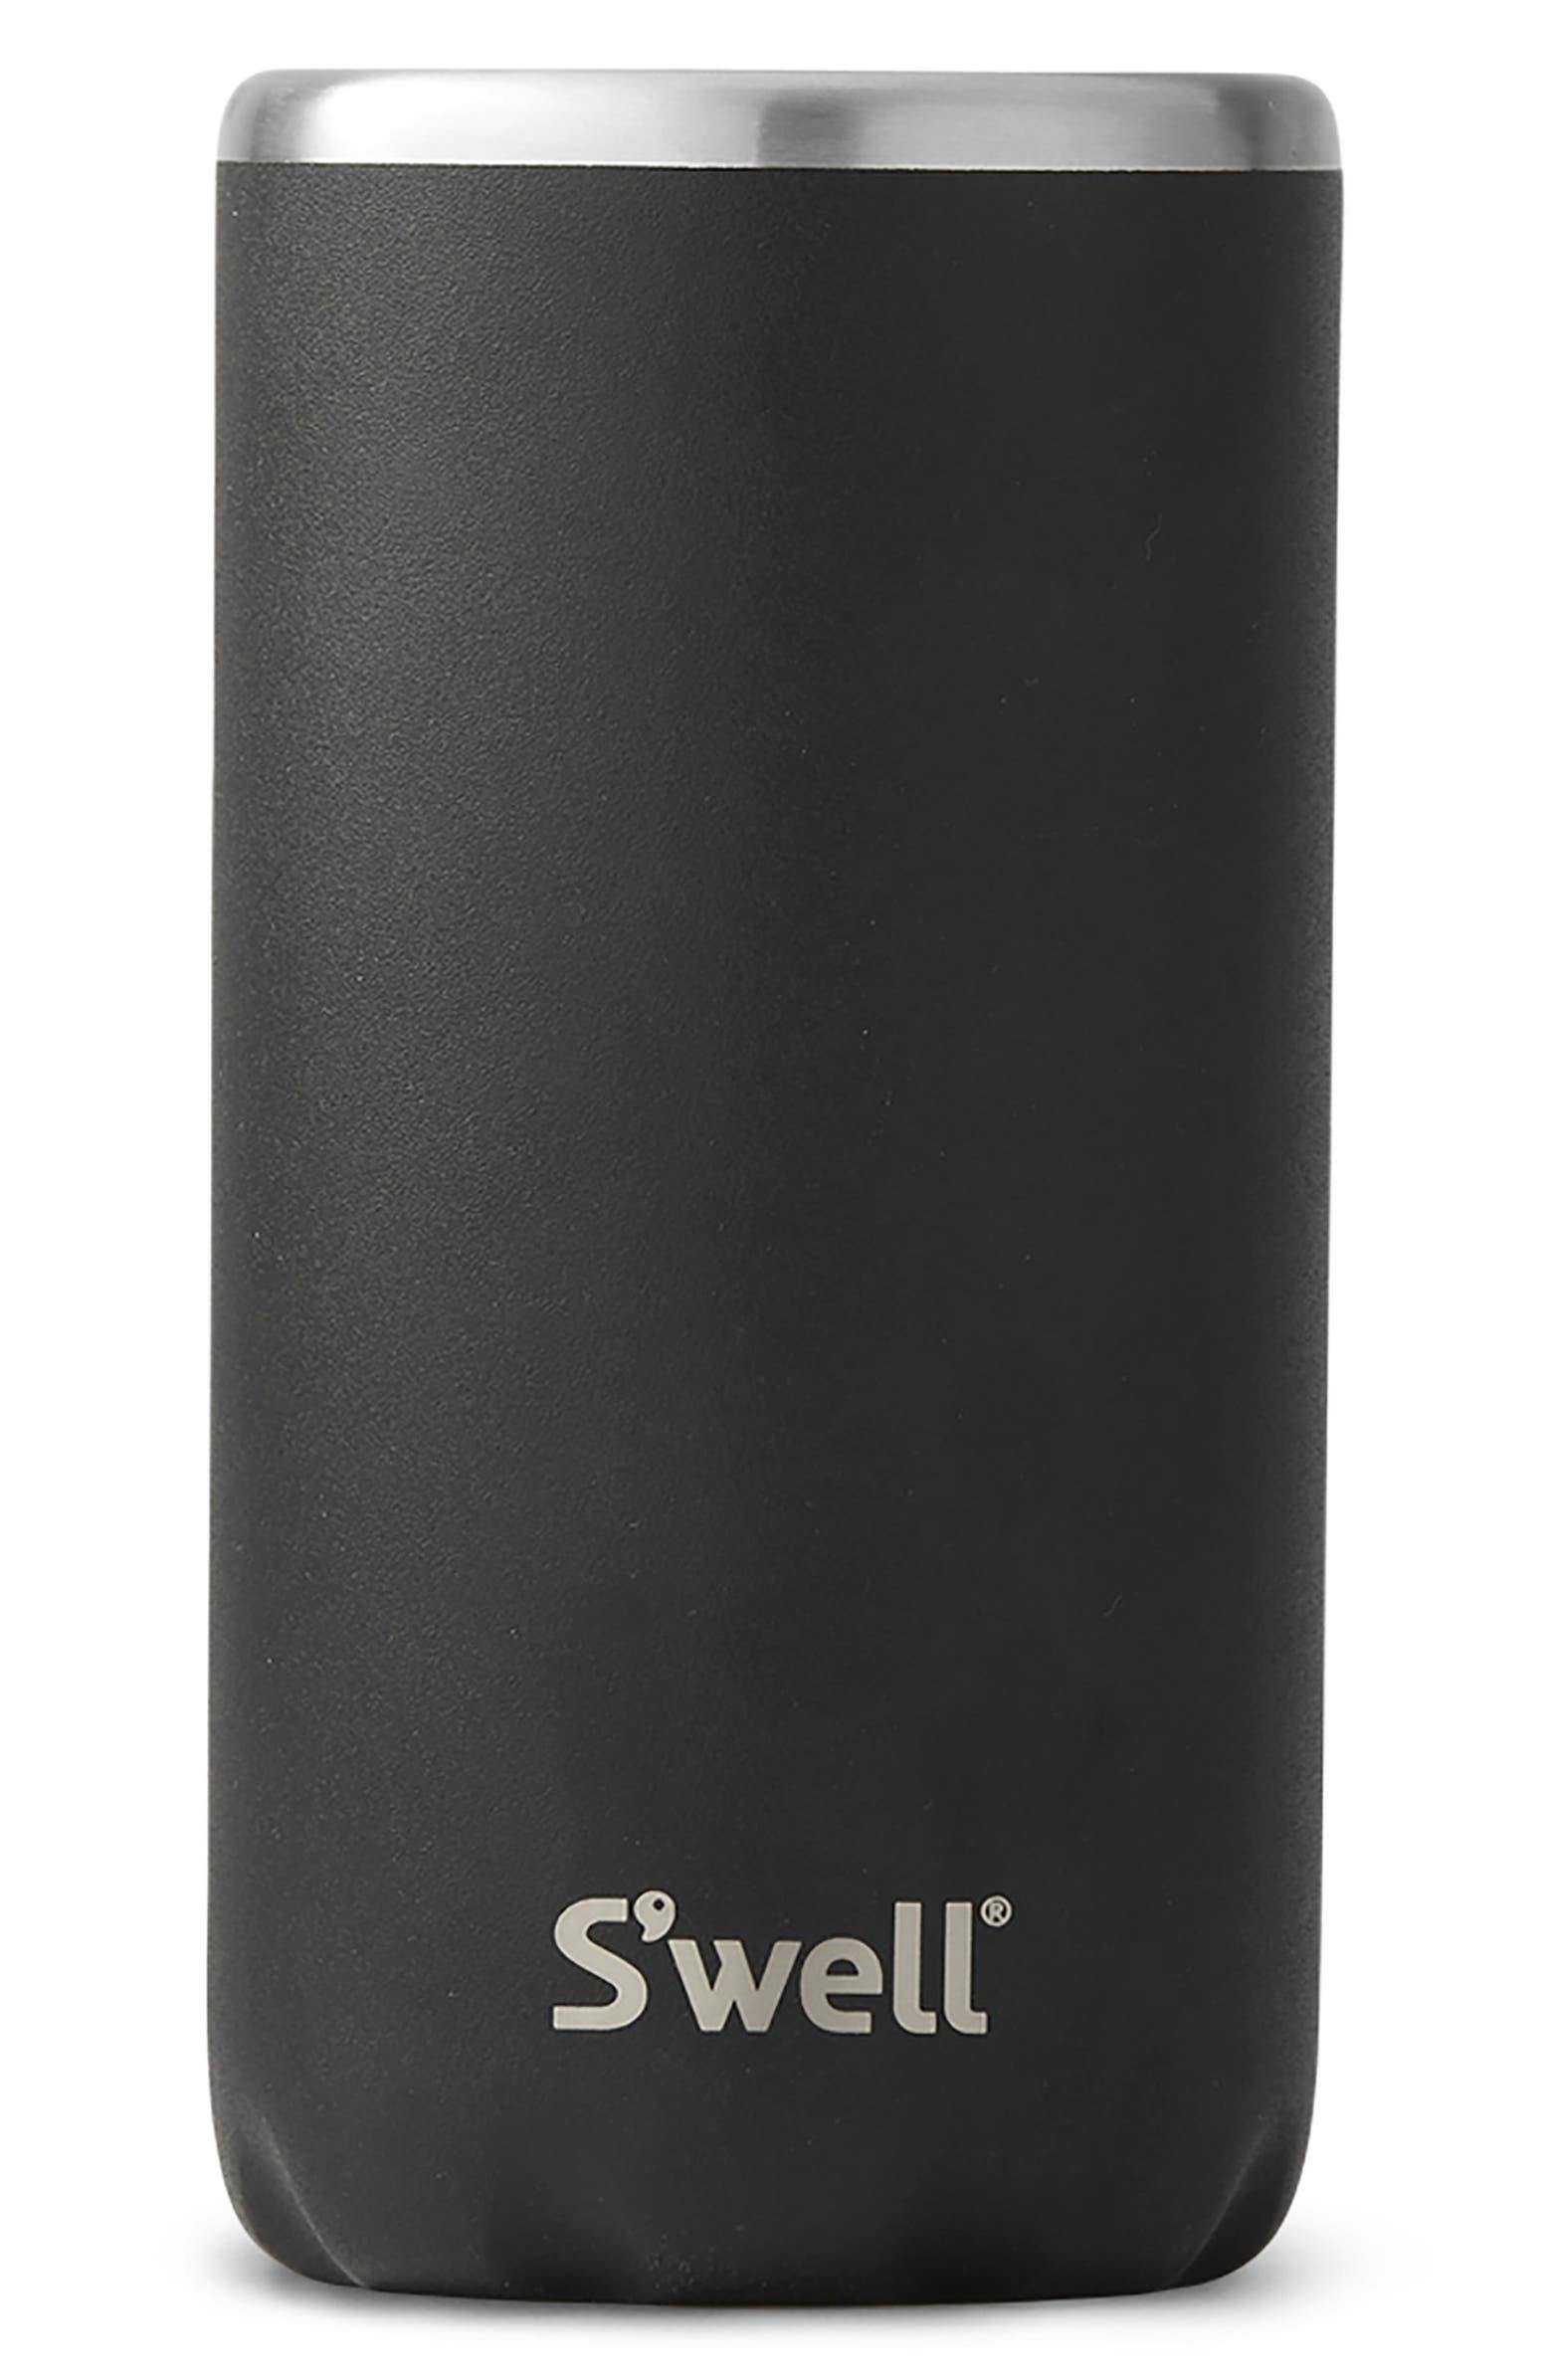 Swell stainless steel mug